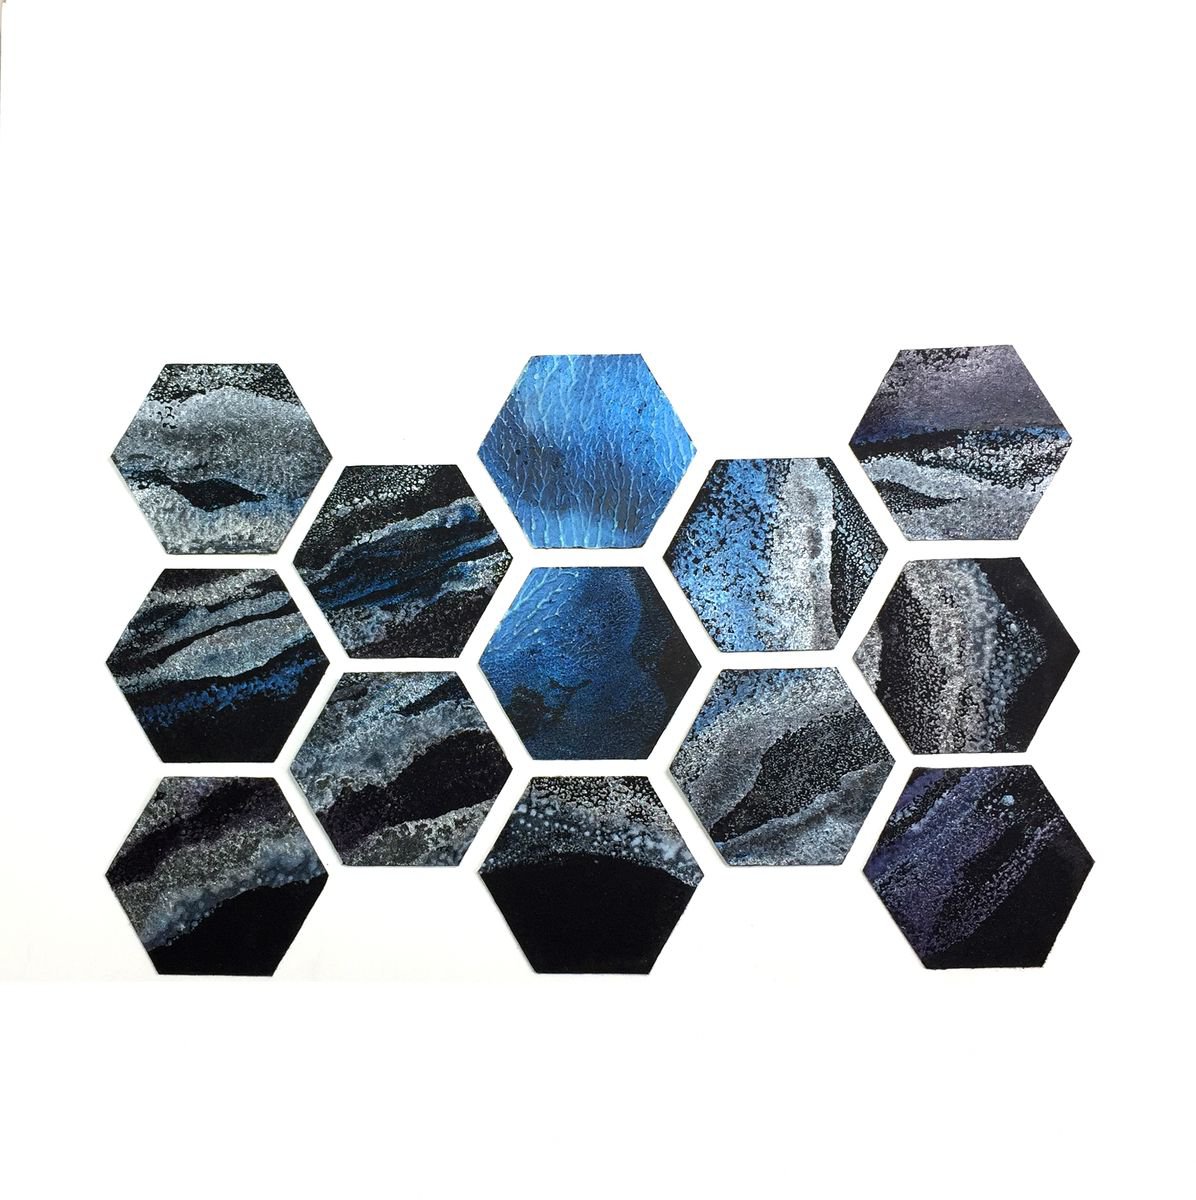 Hexagon 04 by Joni Gruber